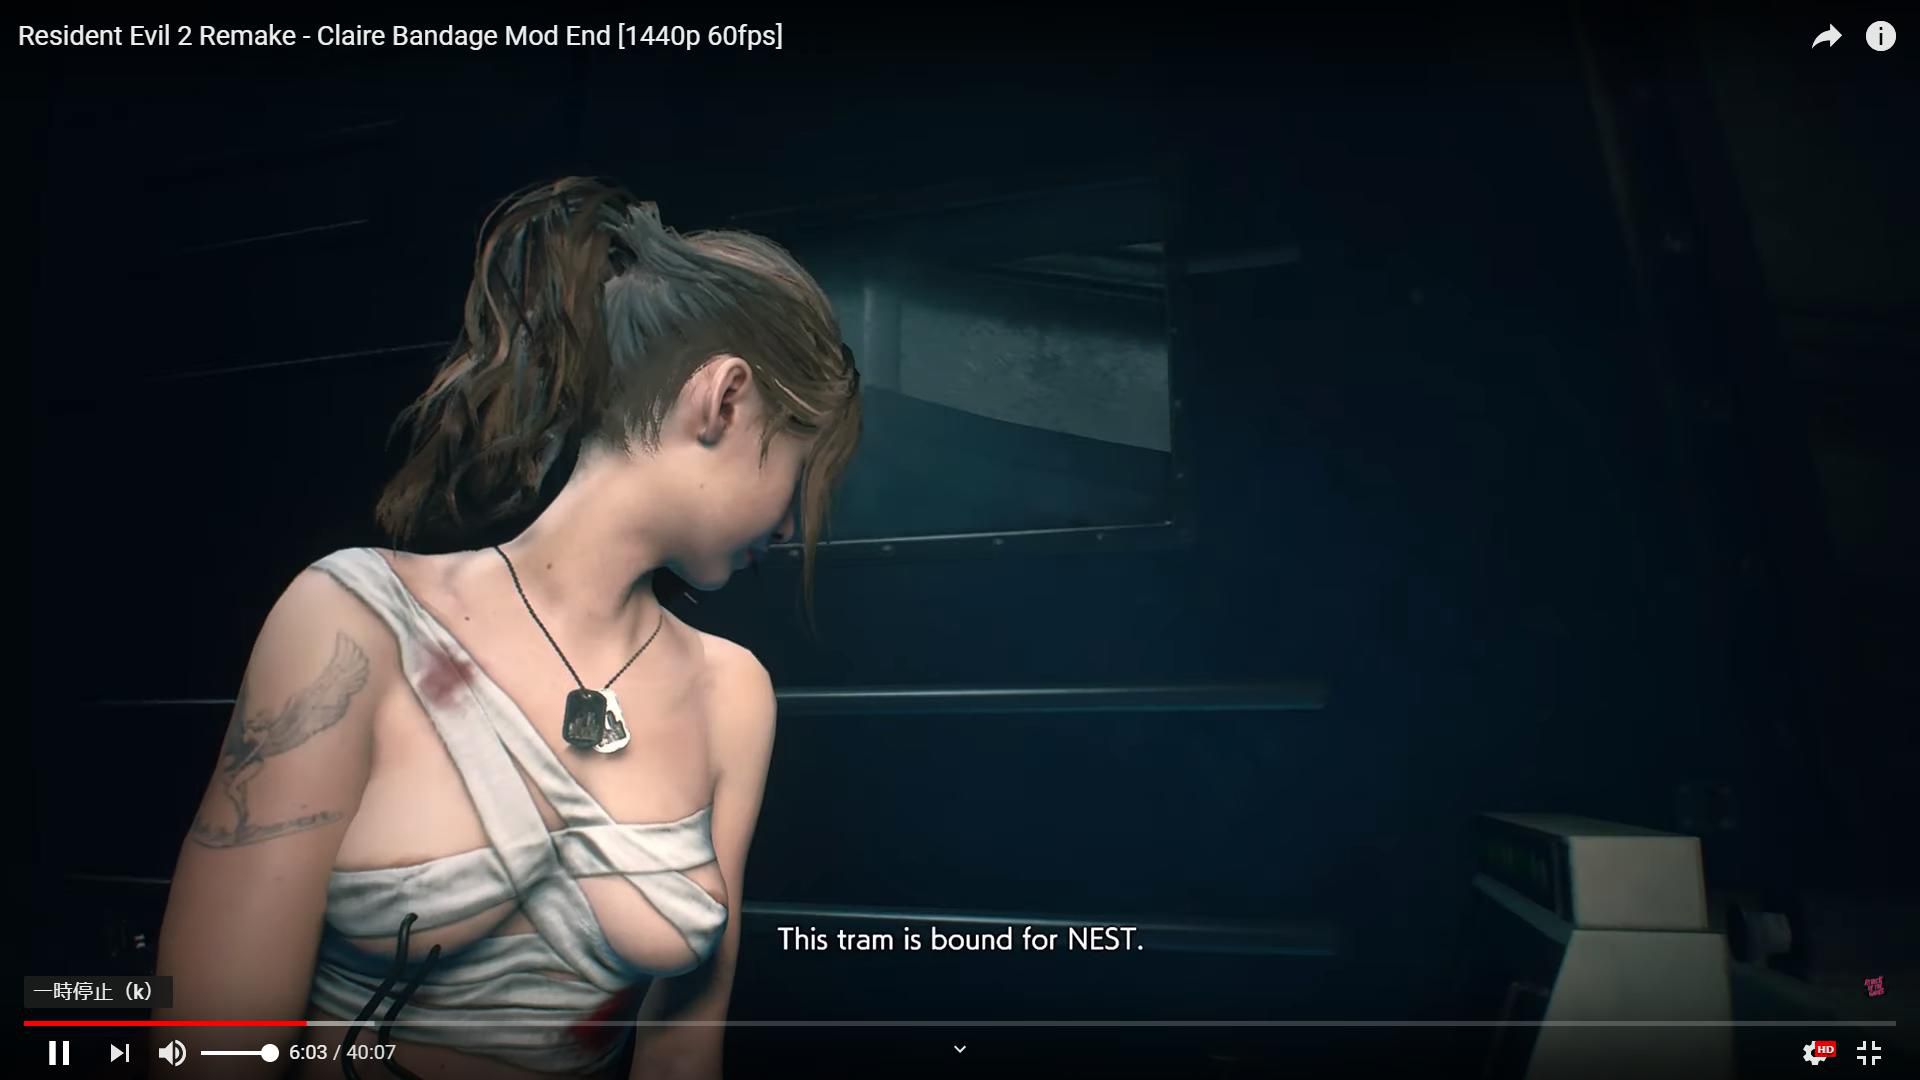 Resident Evil Re2 naked bandage MOD nipples floating erotic too warota wwwwwww 1